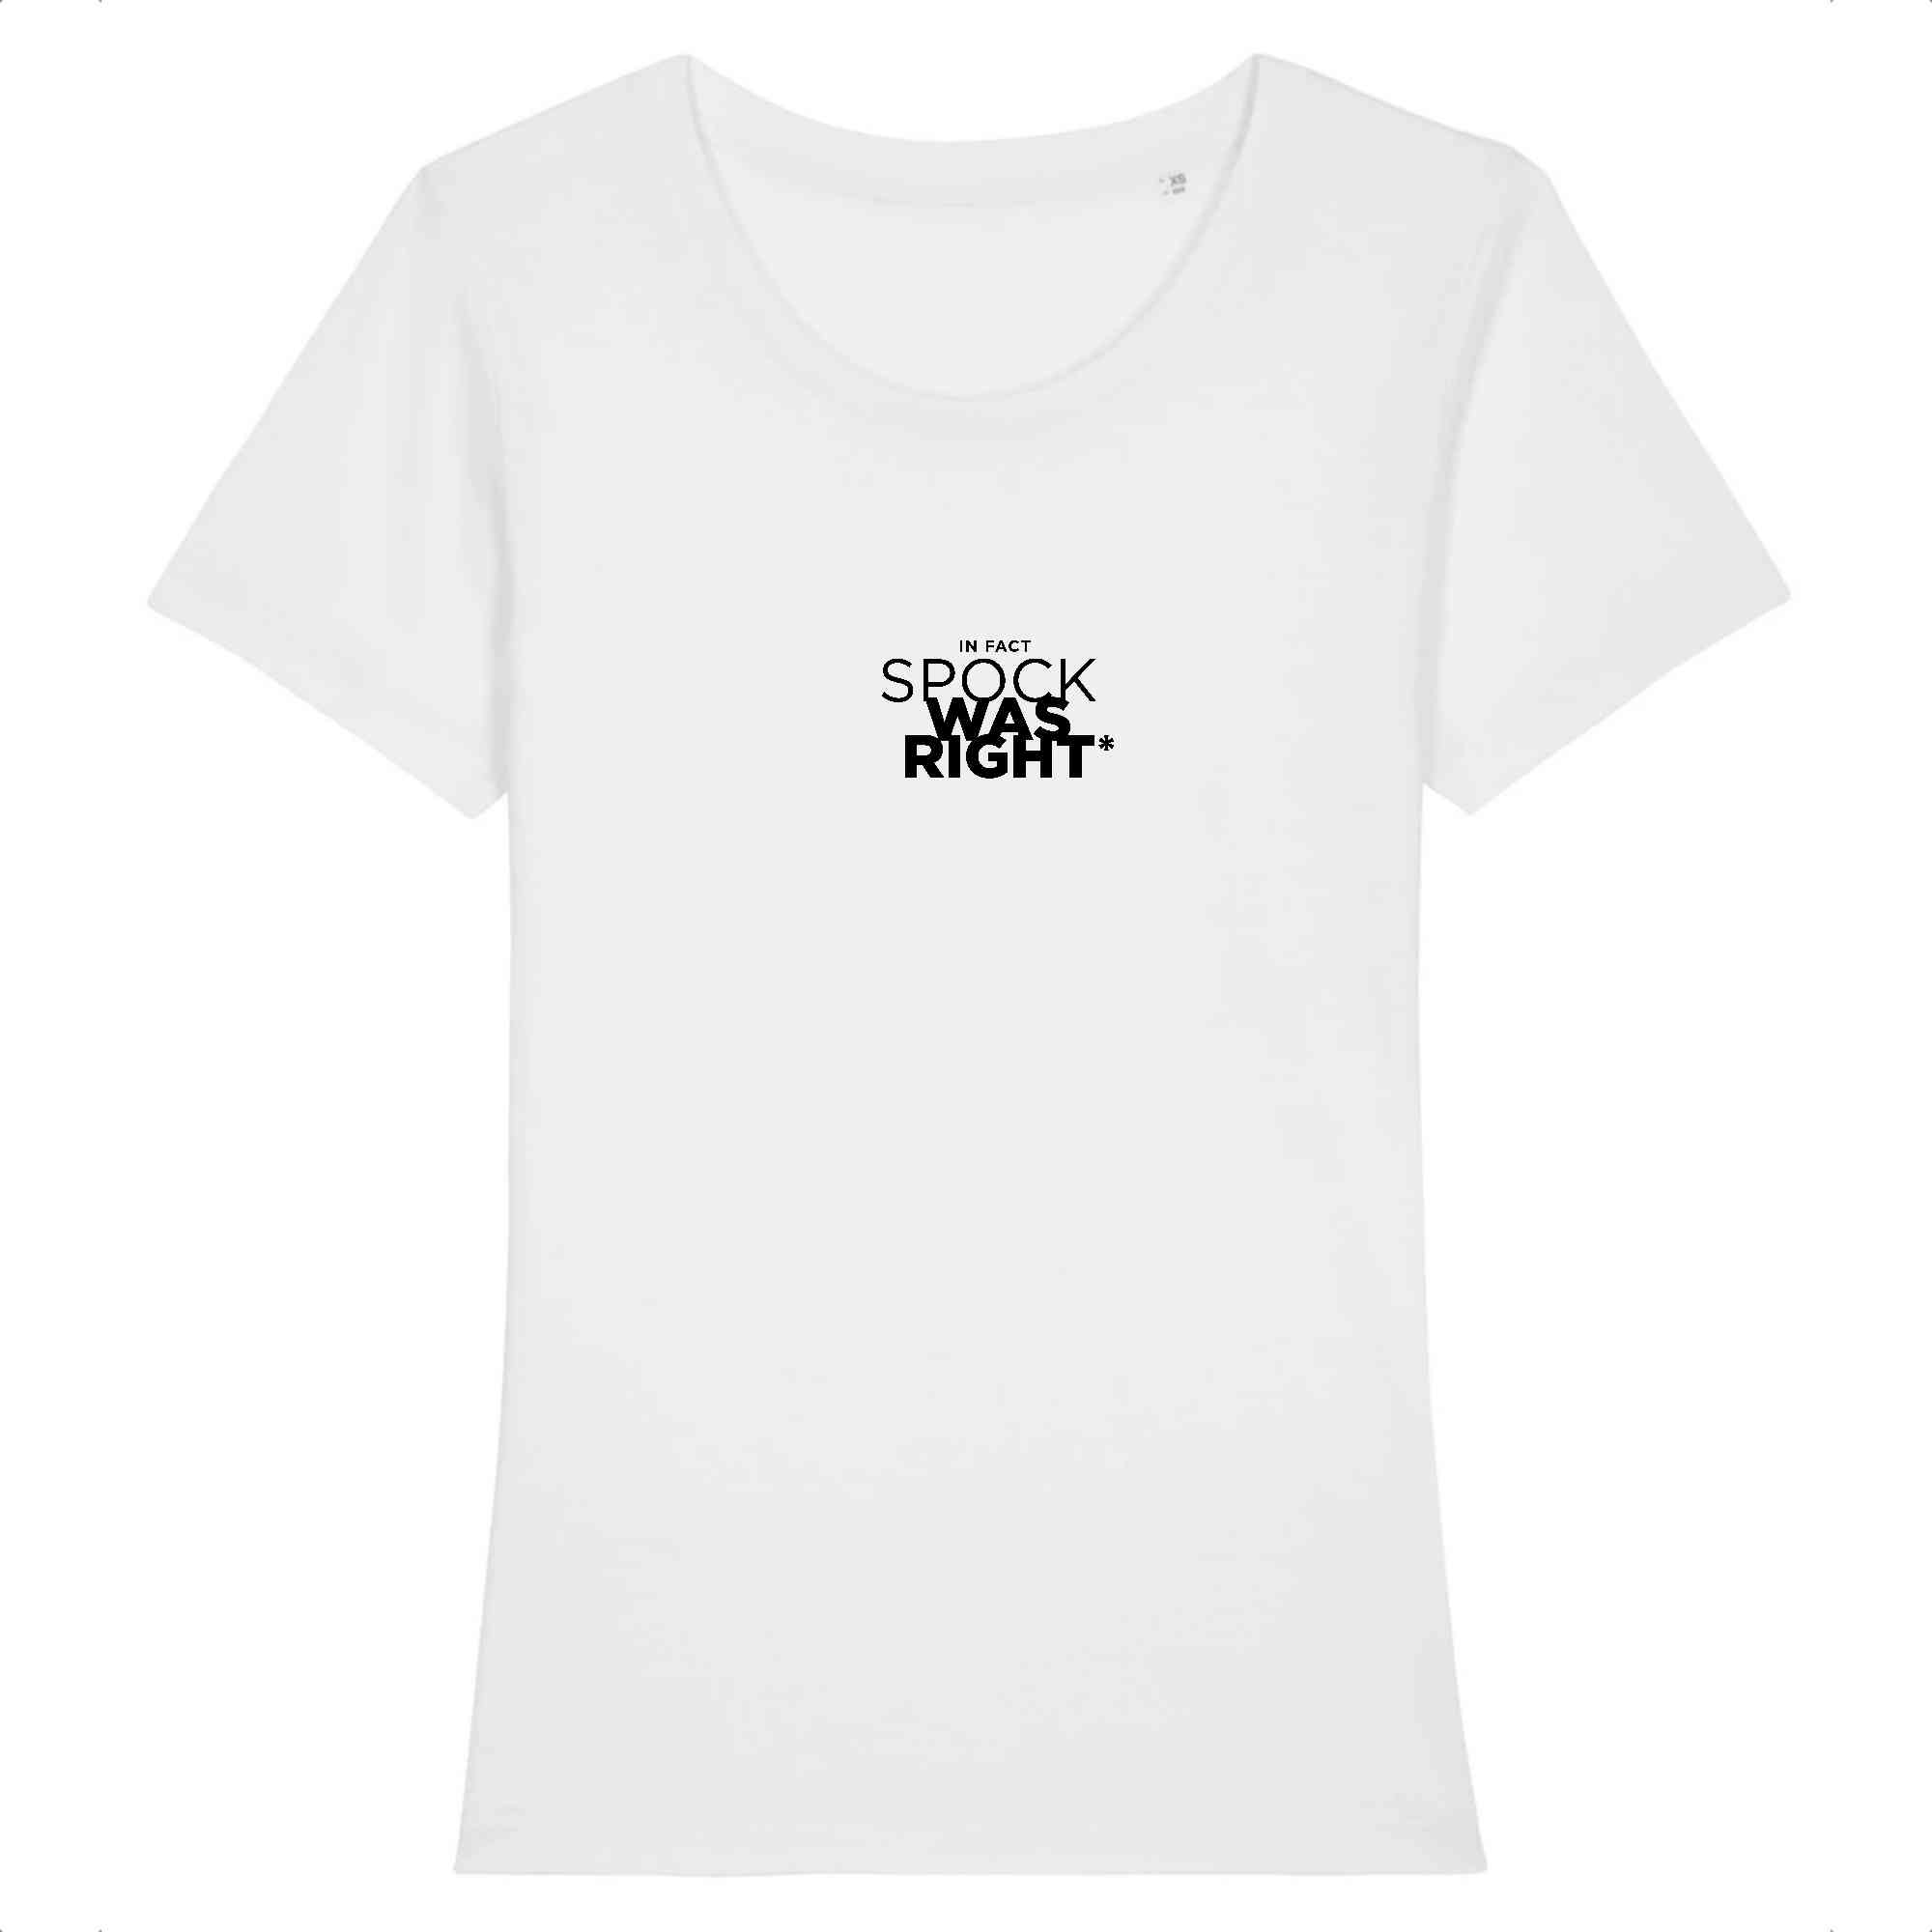 T-shirt femme blanc en coton bio SPOCK WAS RIGHT - Collection tshirt femme inspirant